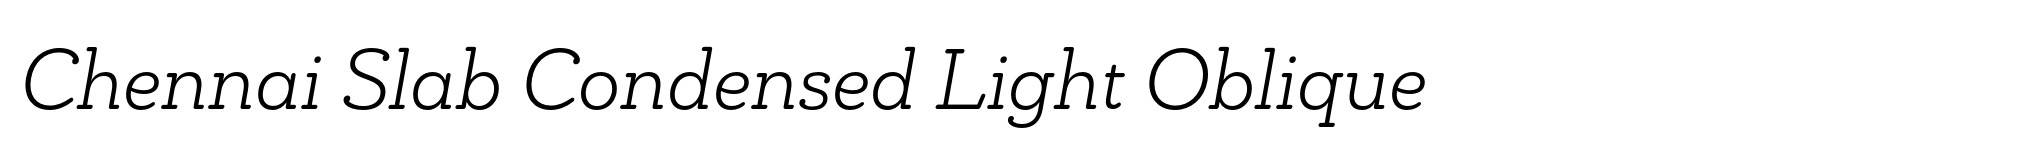 Chennai Slab Condensed Light Oblique image